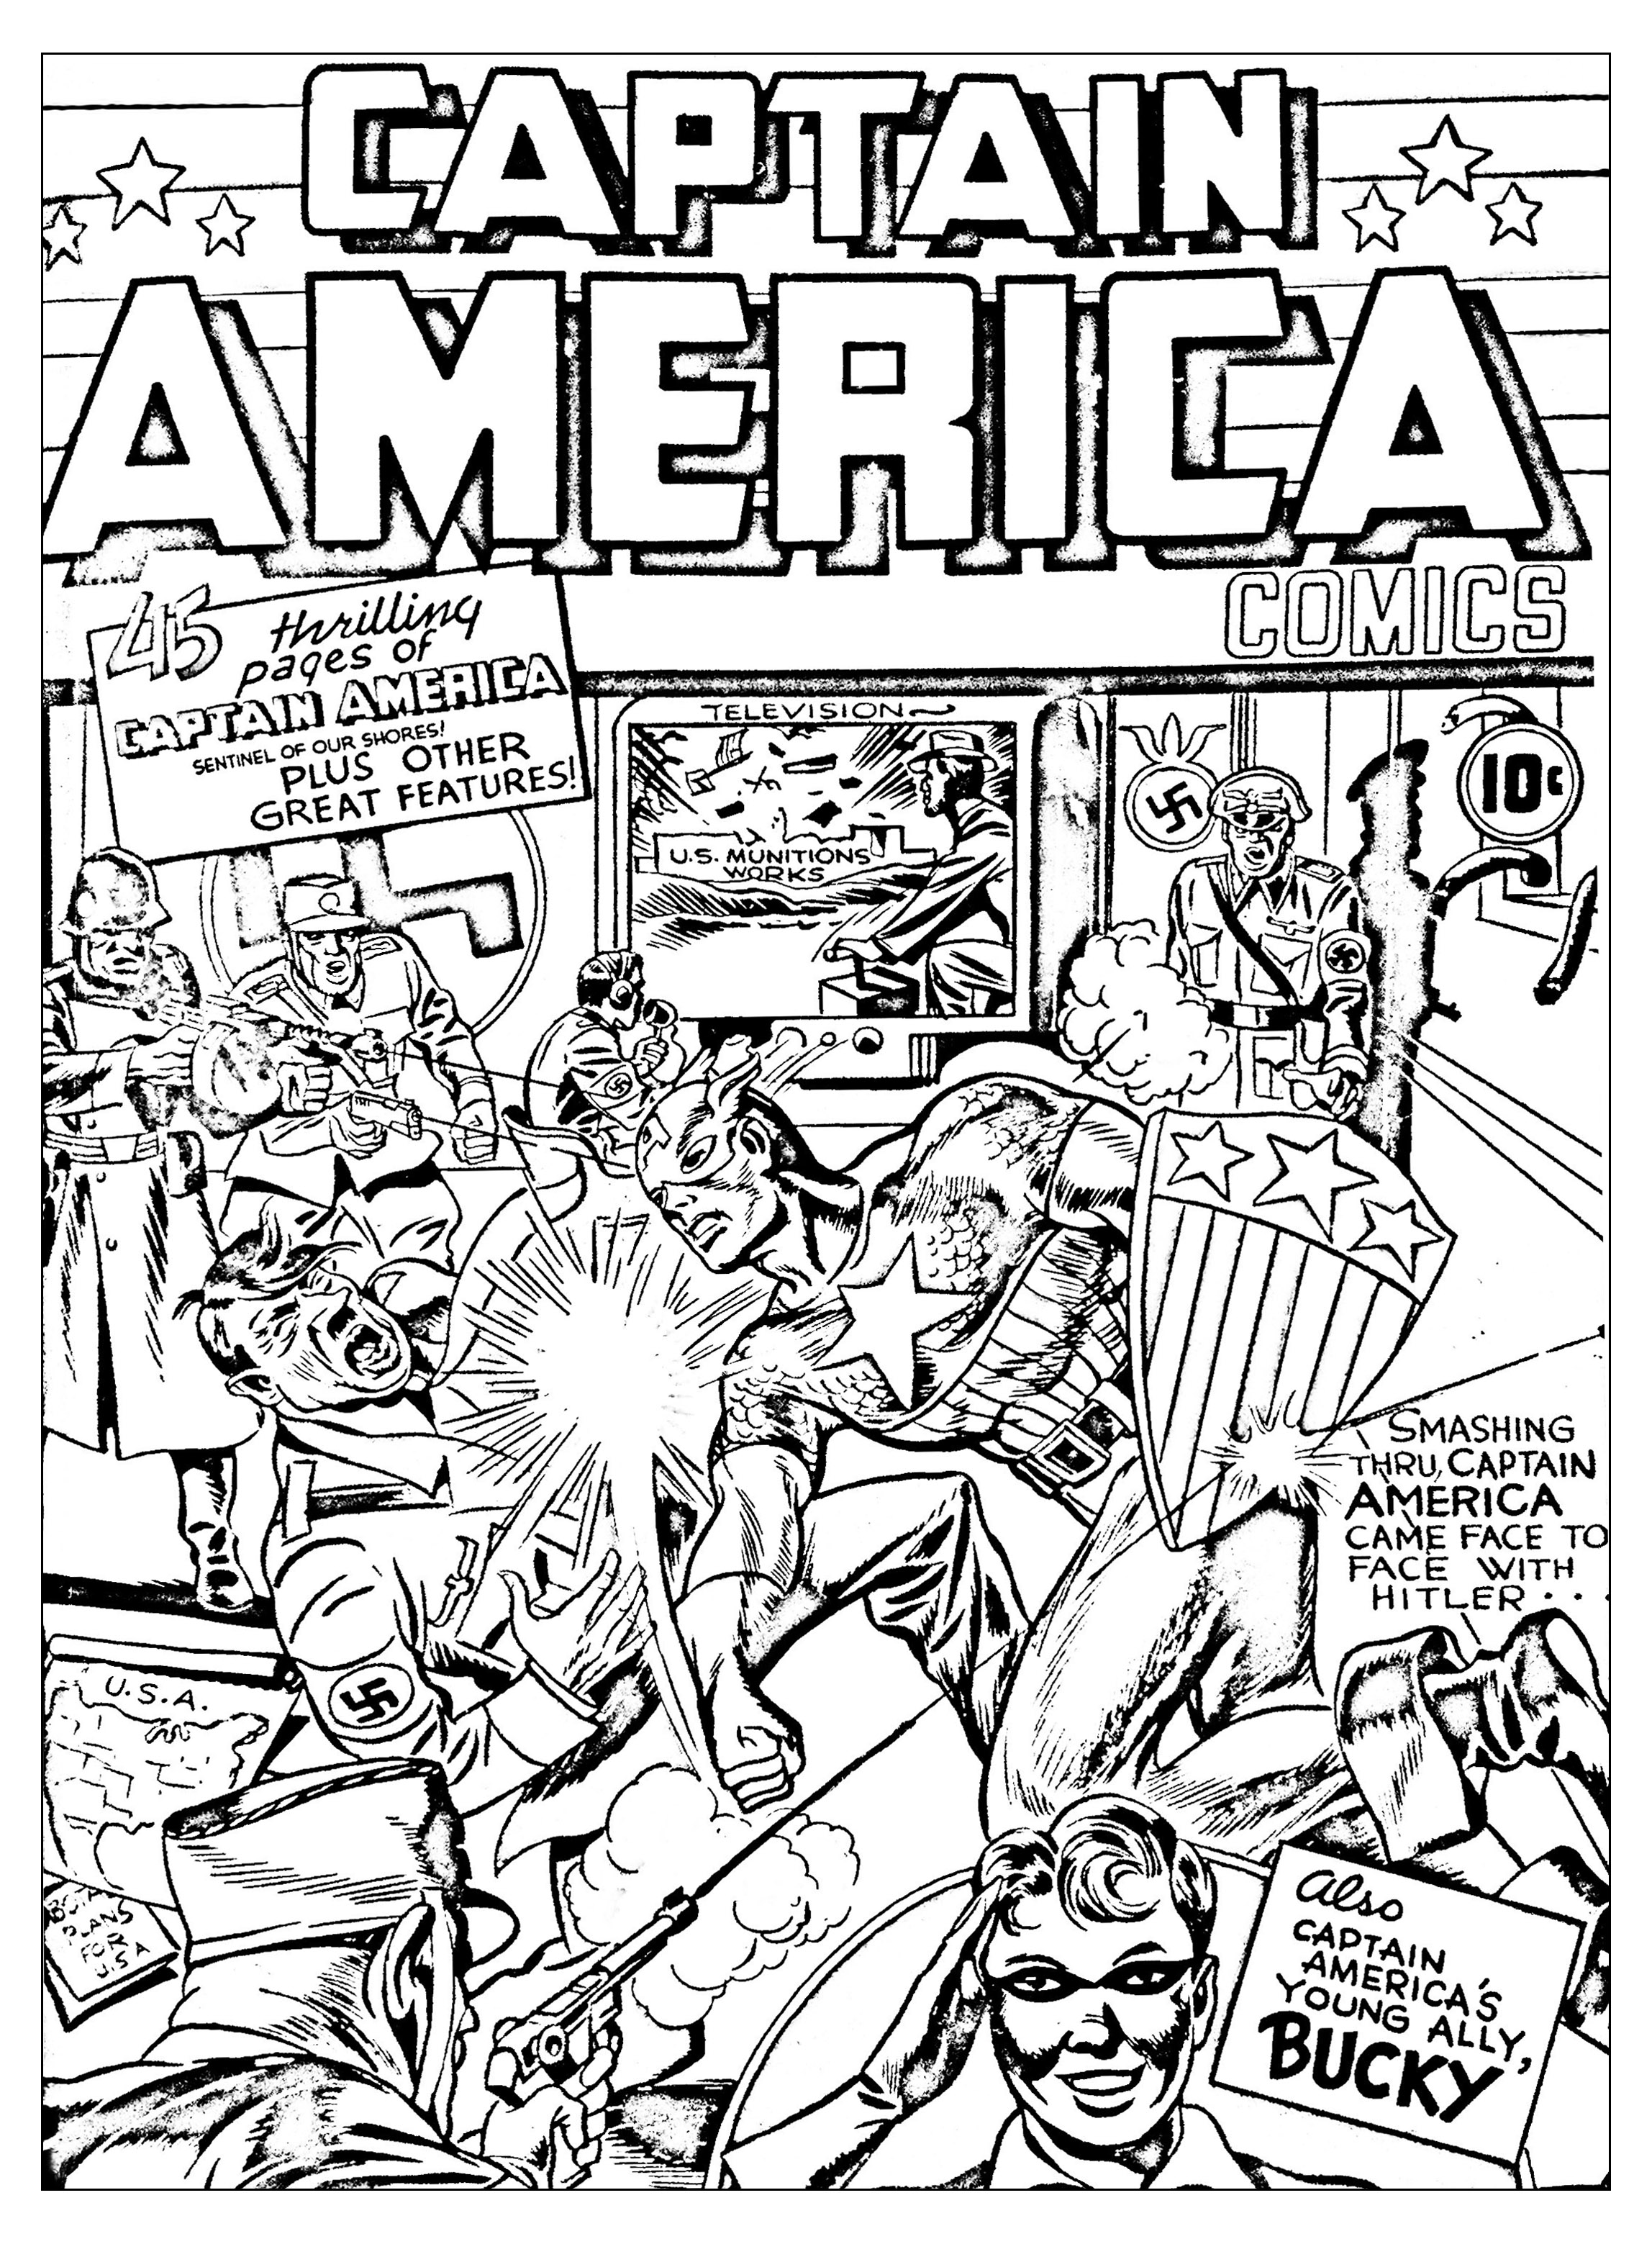 Captain america vs hitler - Image with : Marvel